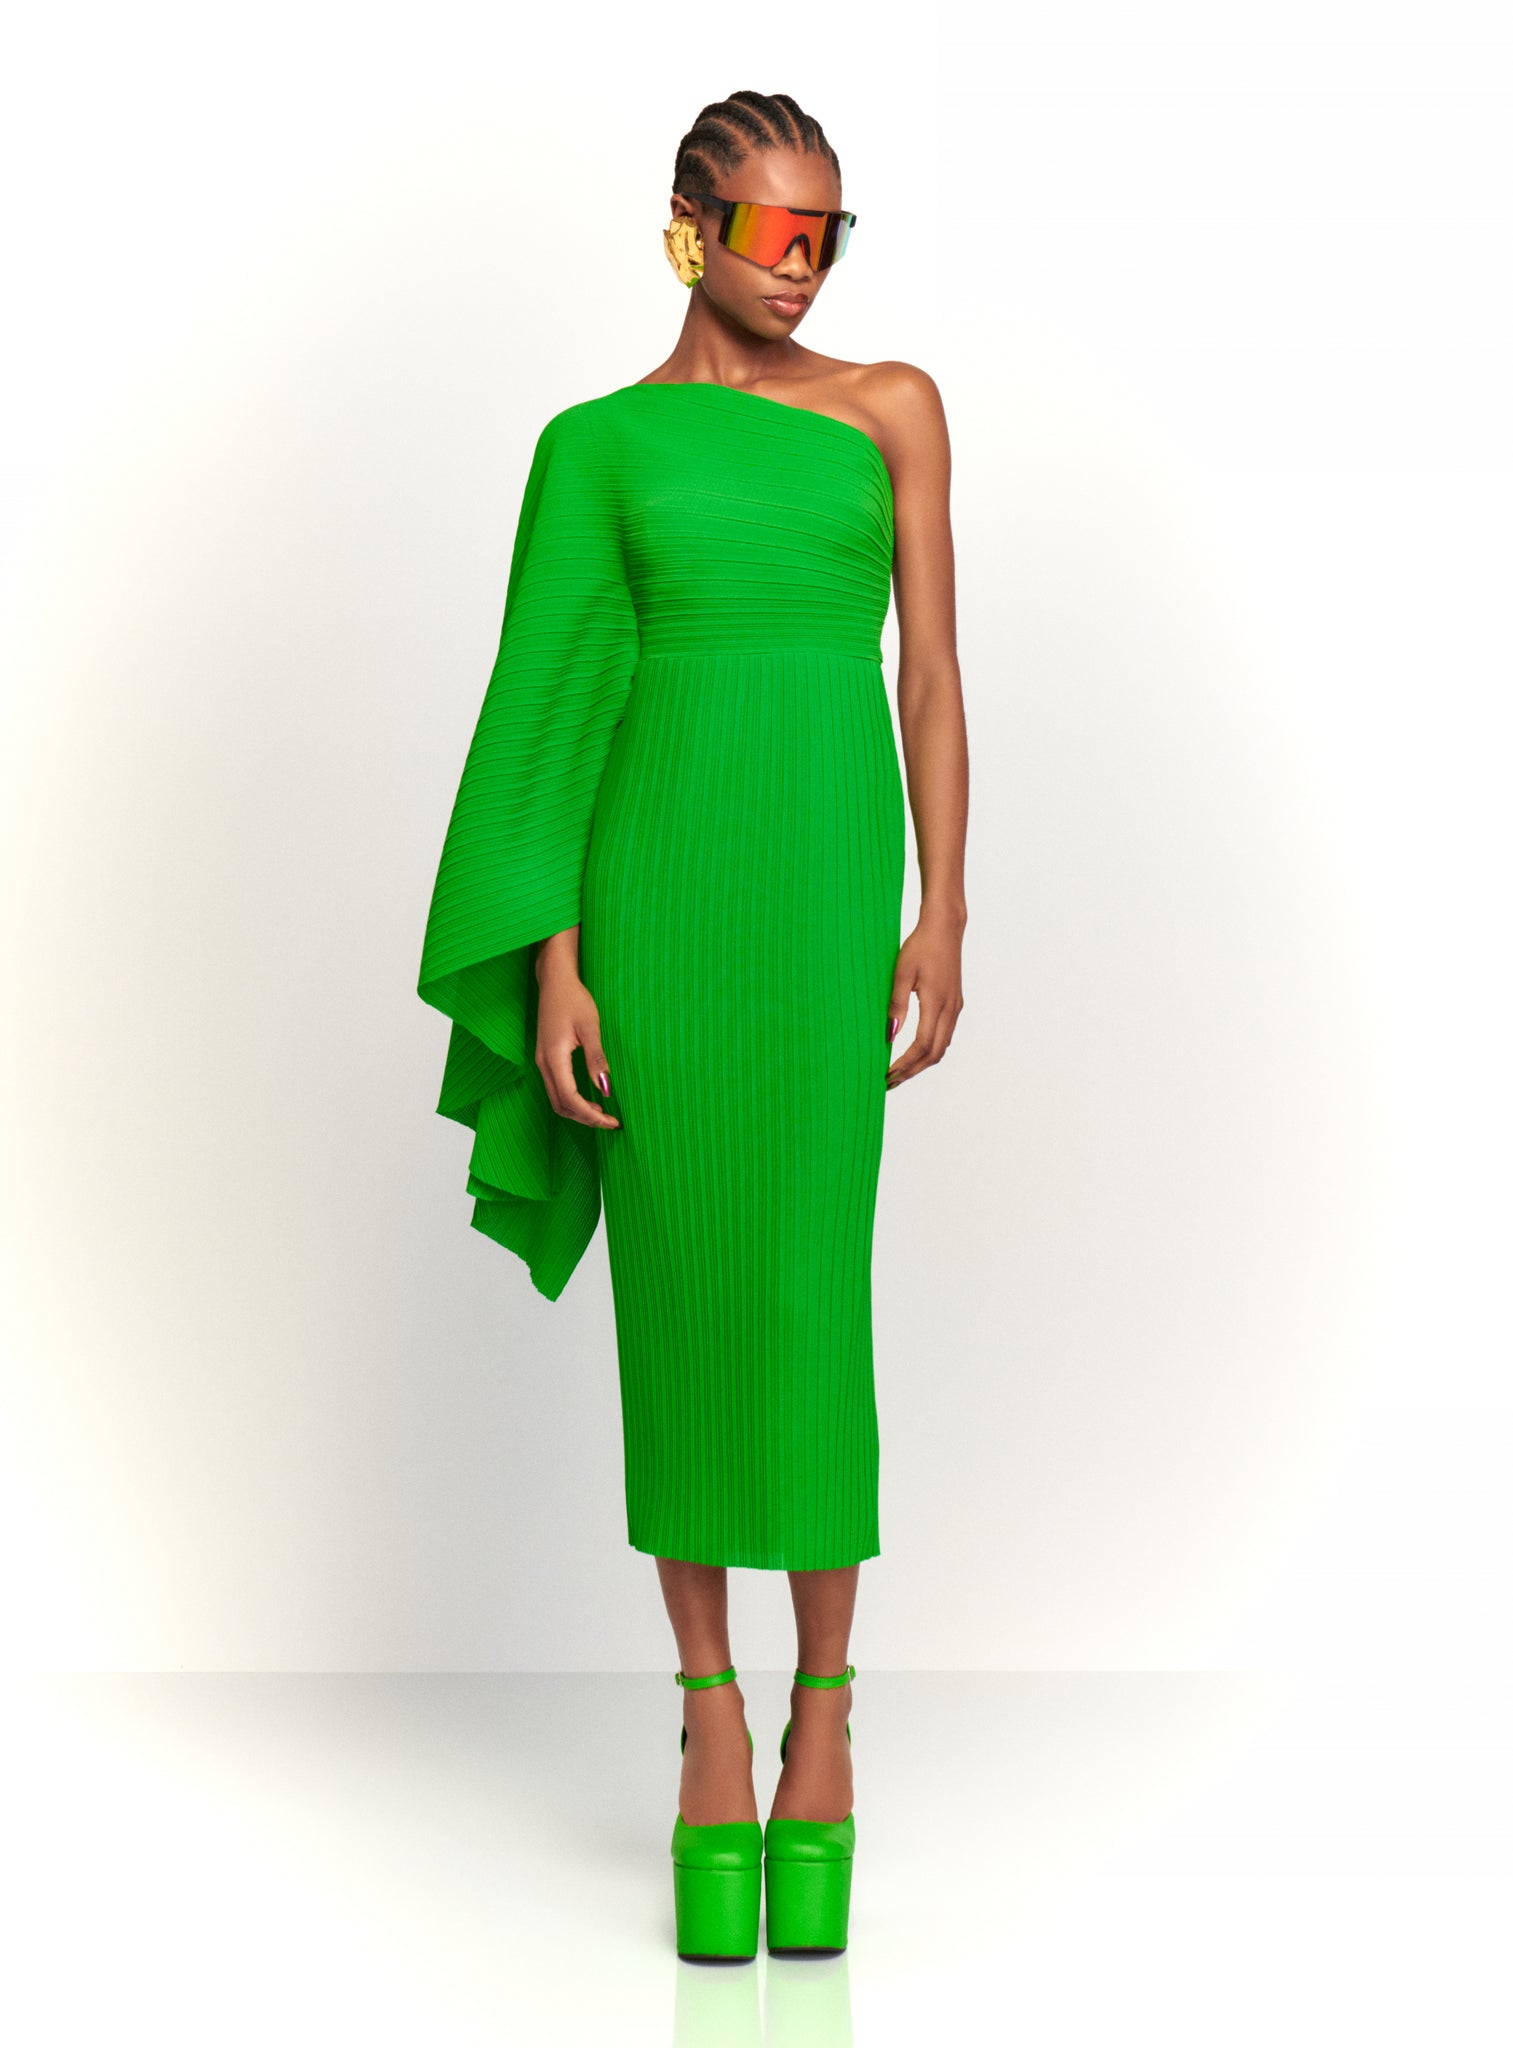 The Lenna Midi Dress in Bright Green